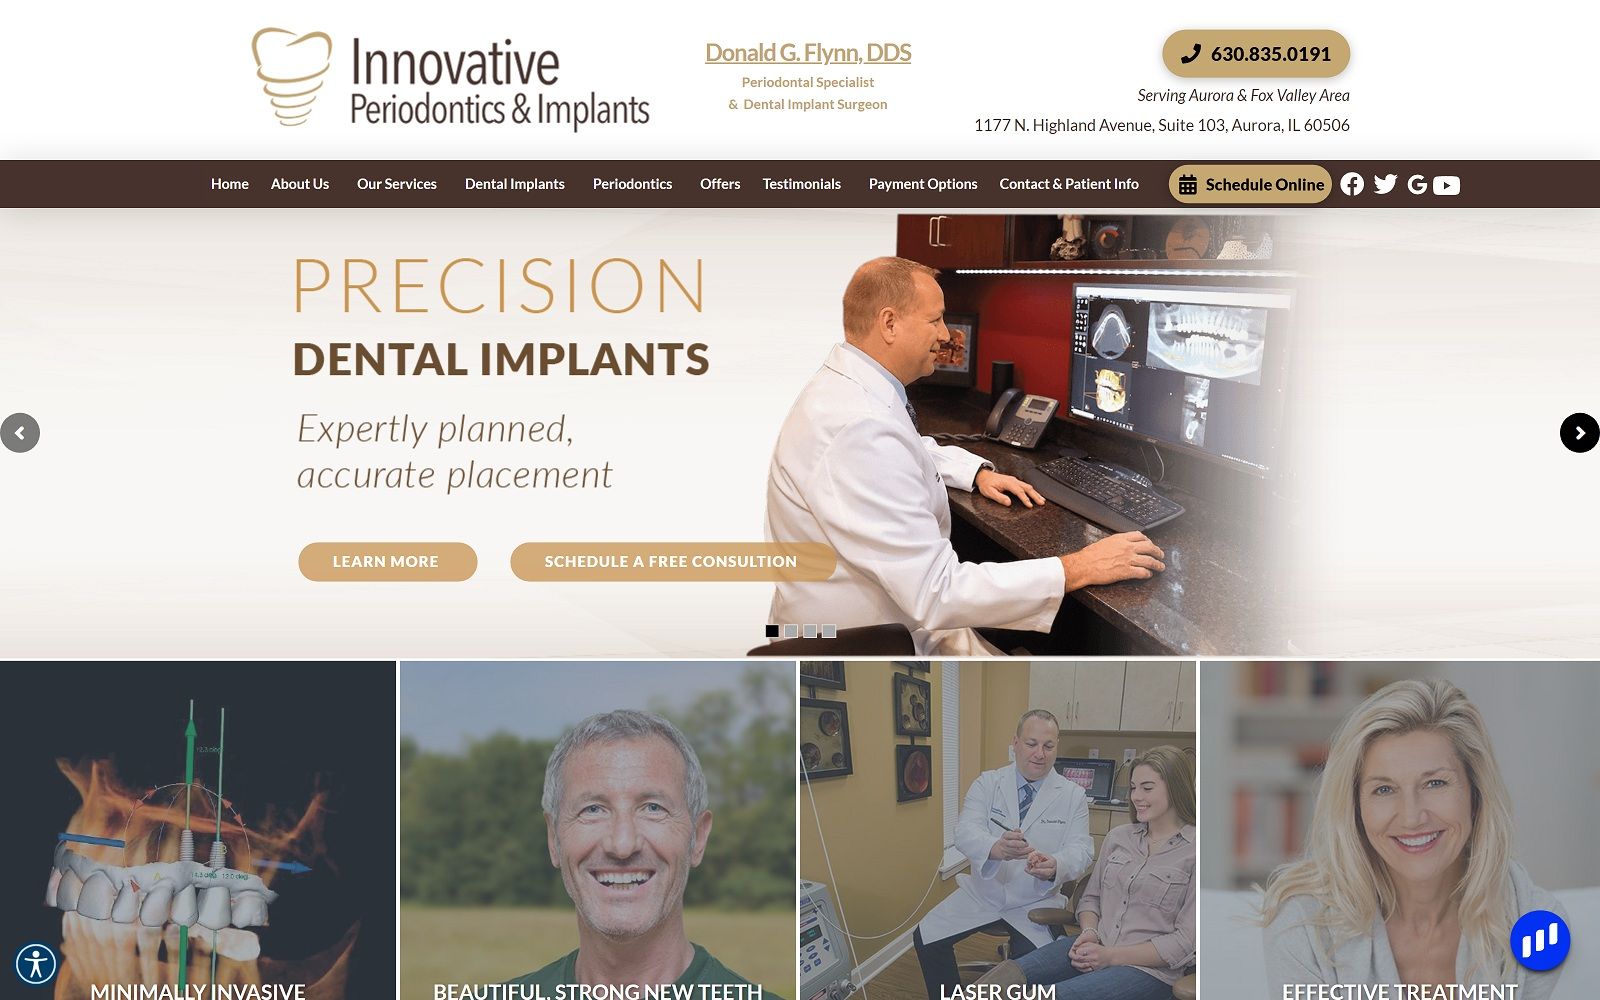 The screenshot of innovative periodontics & implants: donald g flynn, dds innovativeperio. Com website